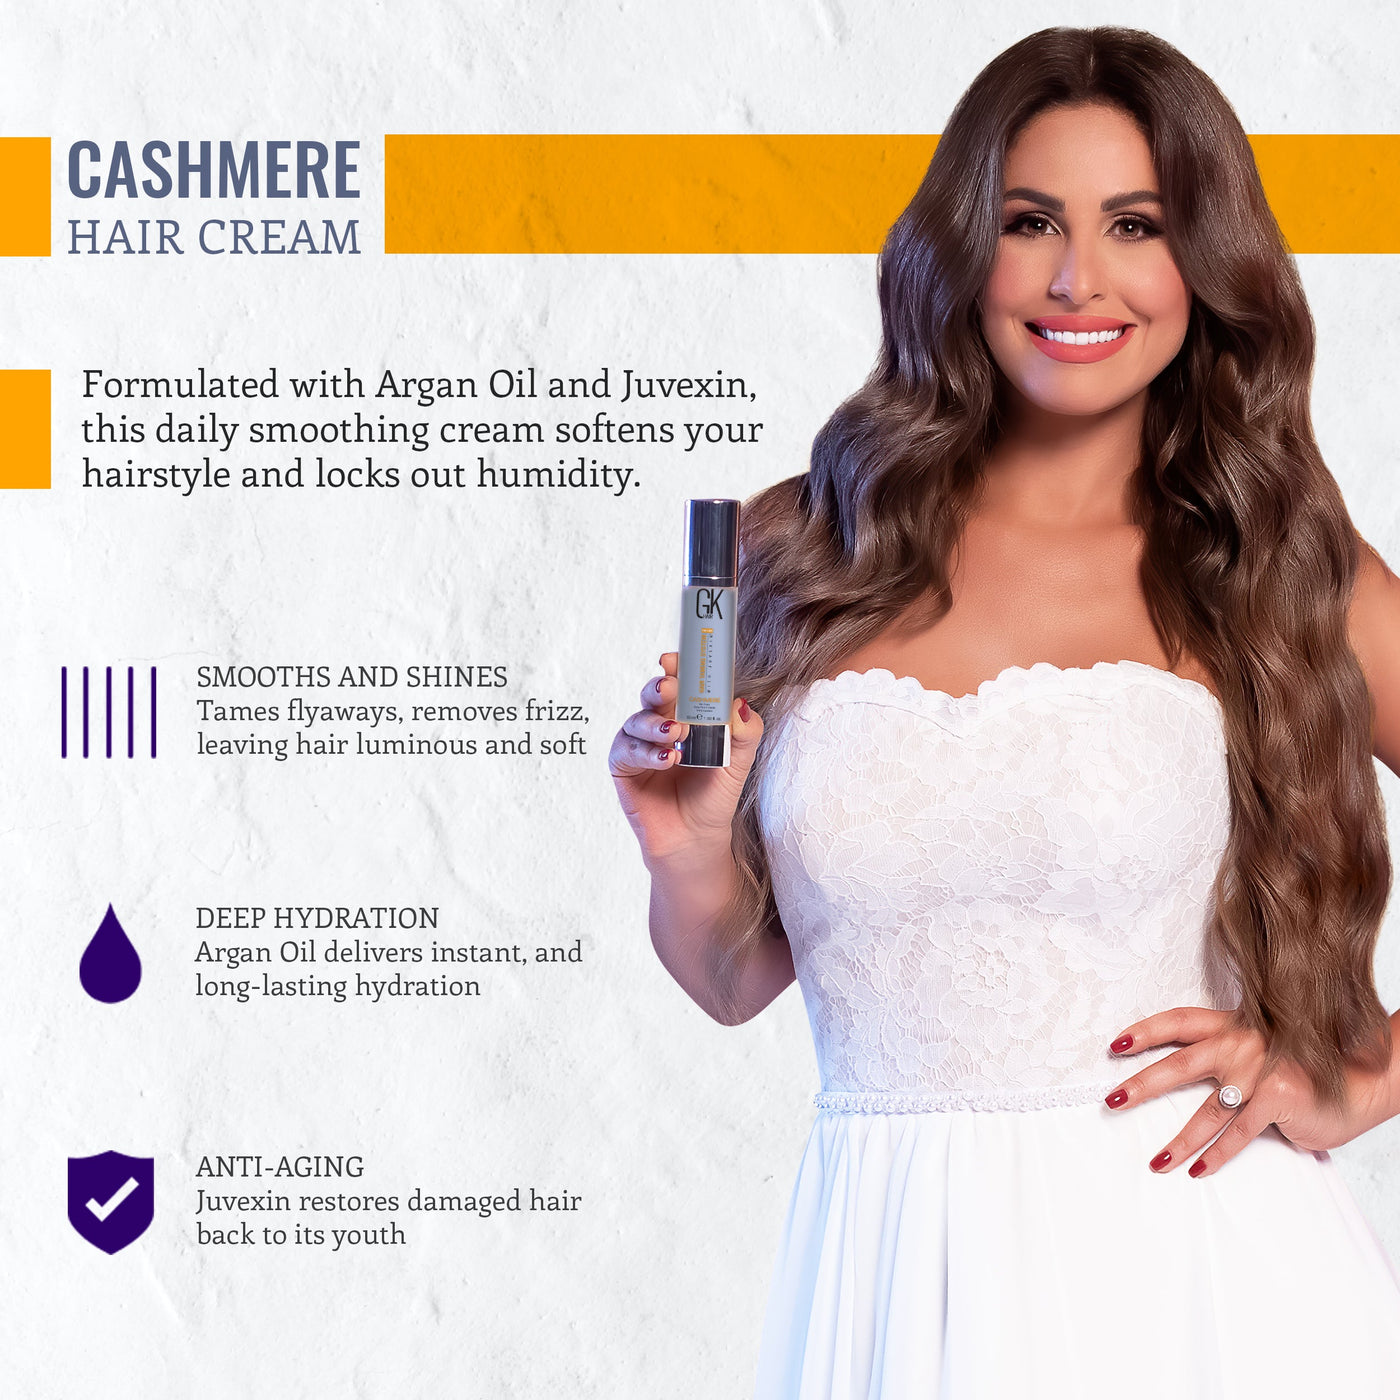 Best Cashmere Hair Cream | GK Hair